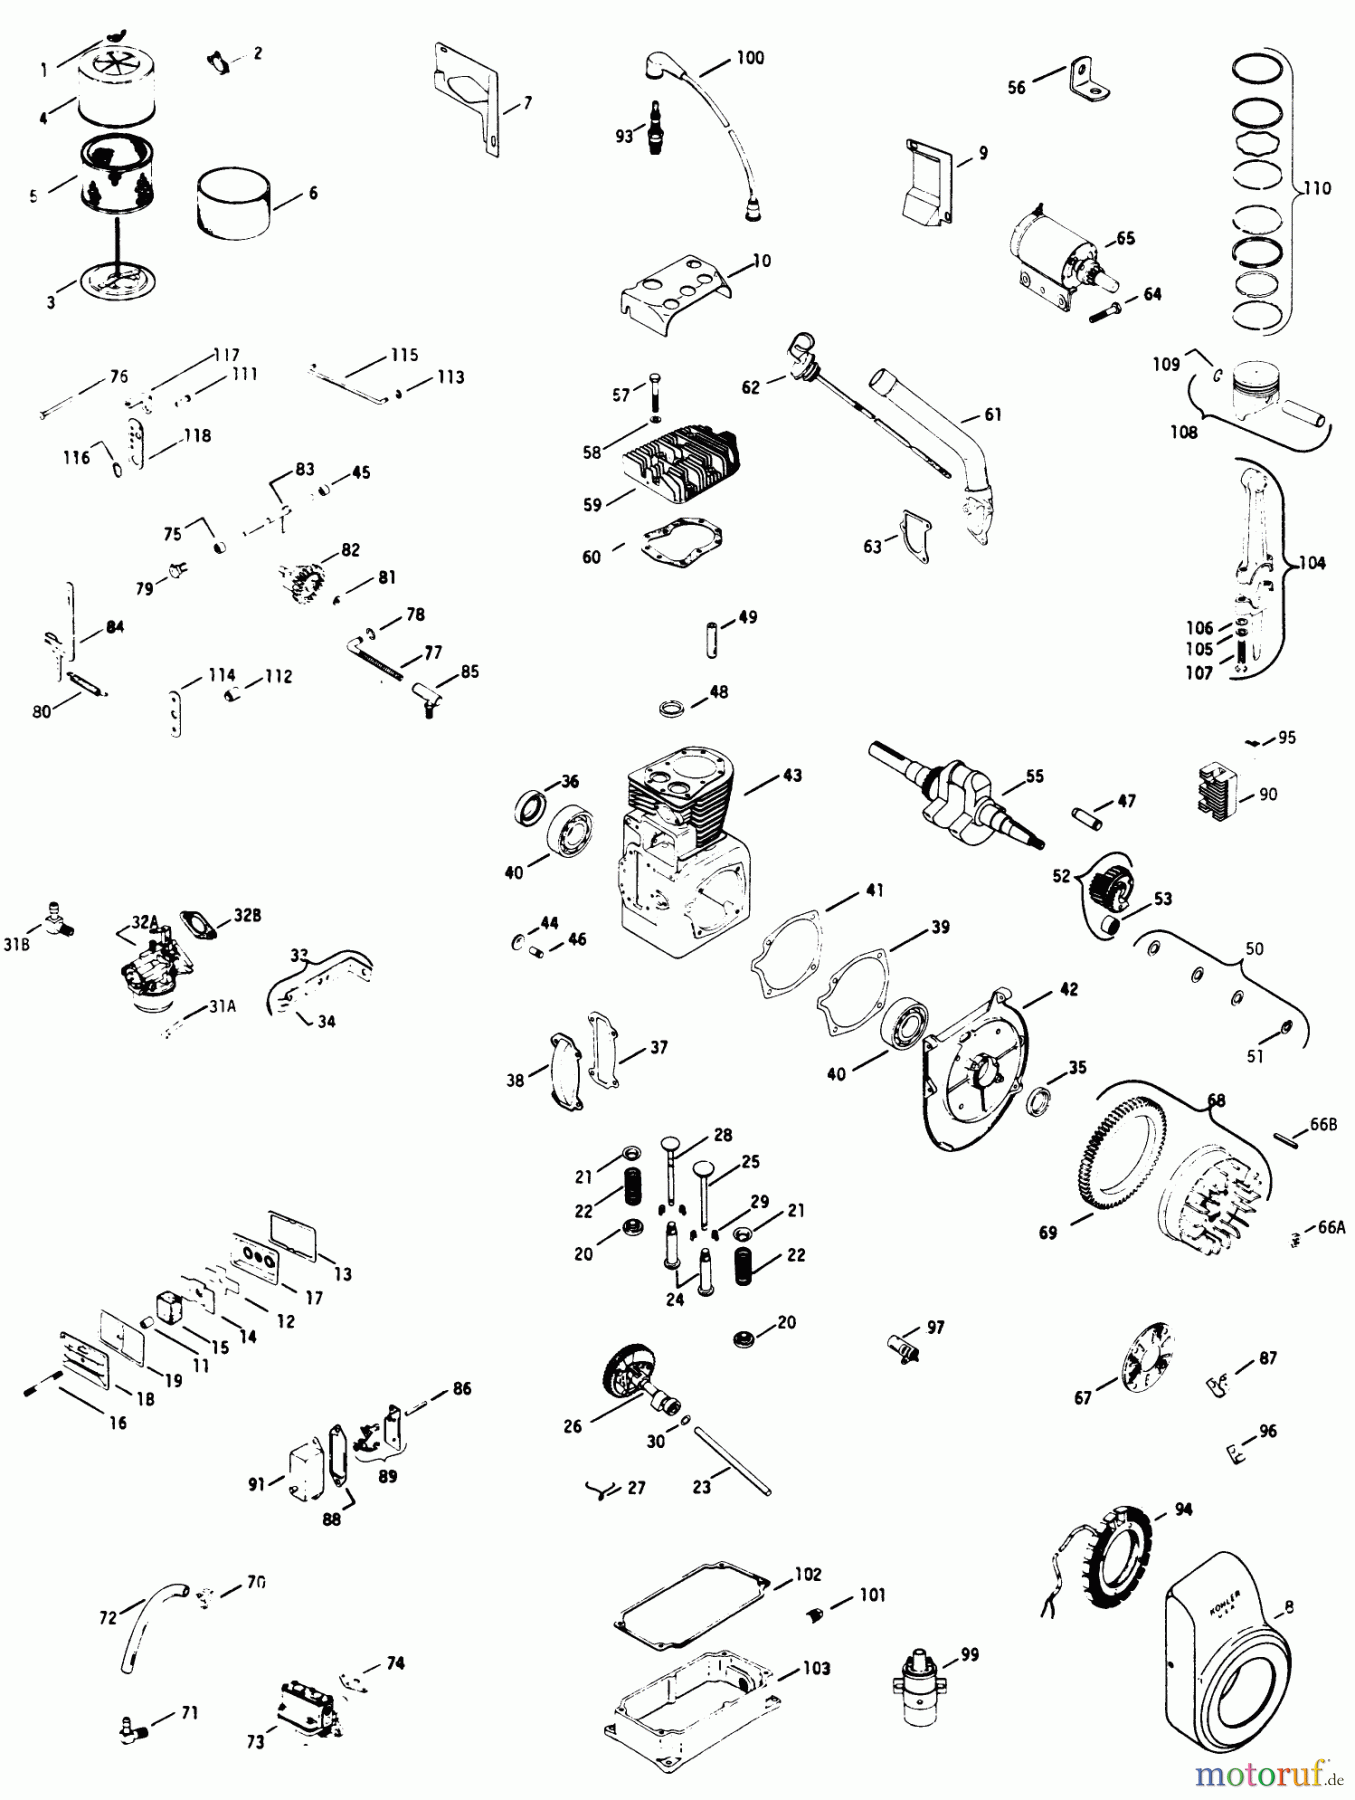  Toro Neu Mowers, Lawn & Garden Tractor Seite 1 71-16KS02 (C-160) - Toro C-160 Automatic Tractor, 1977 16 H.P. ENGINE K341S, SPEC 71128A